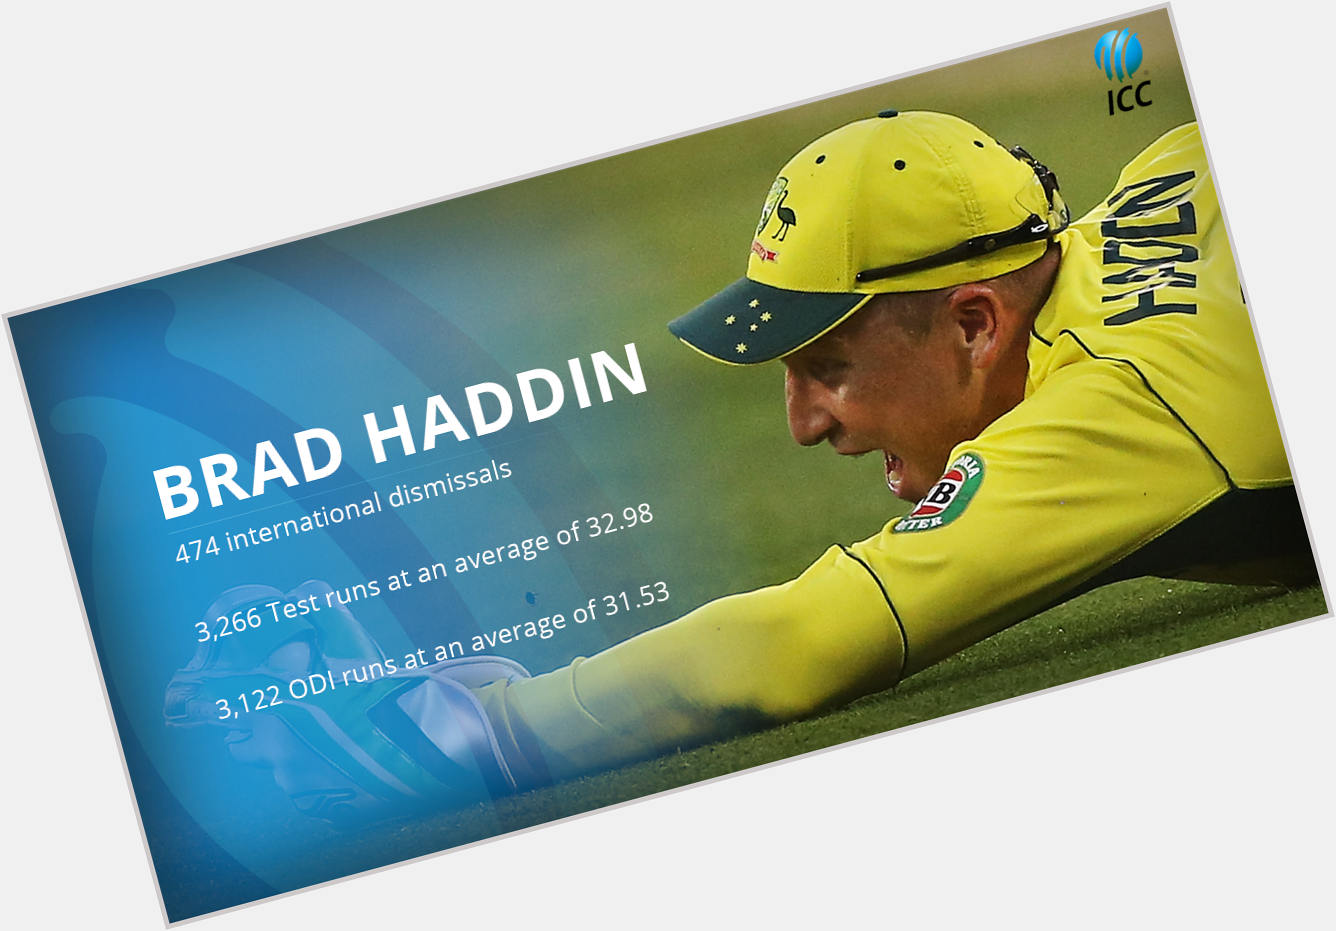 Happy Birthday to Australia\s winning wicket-keeper, Brad Haddin! 